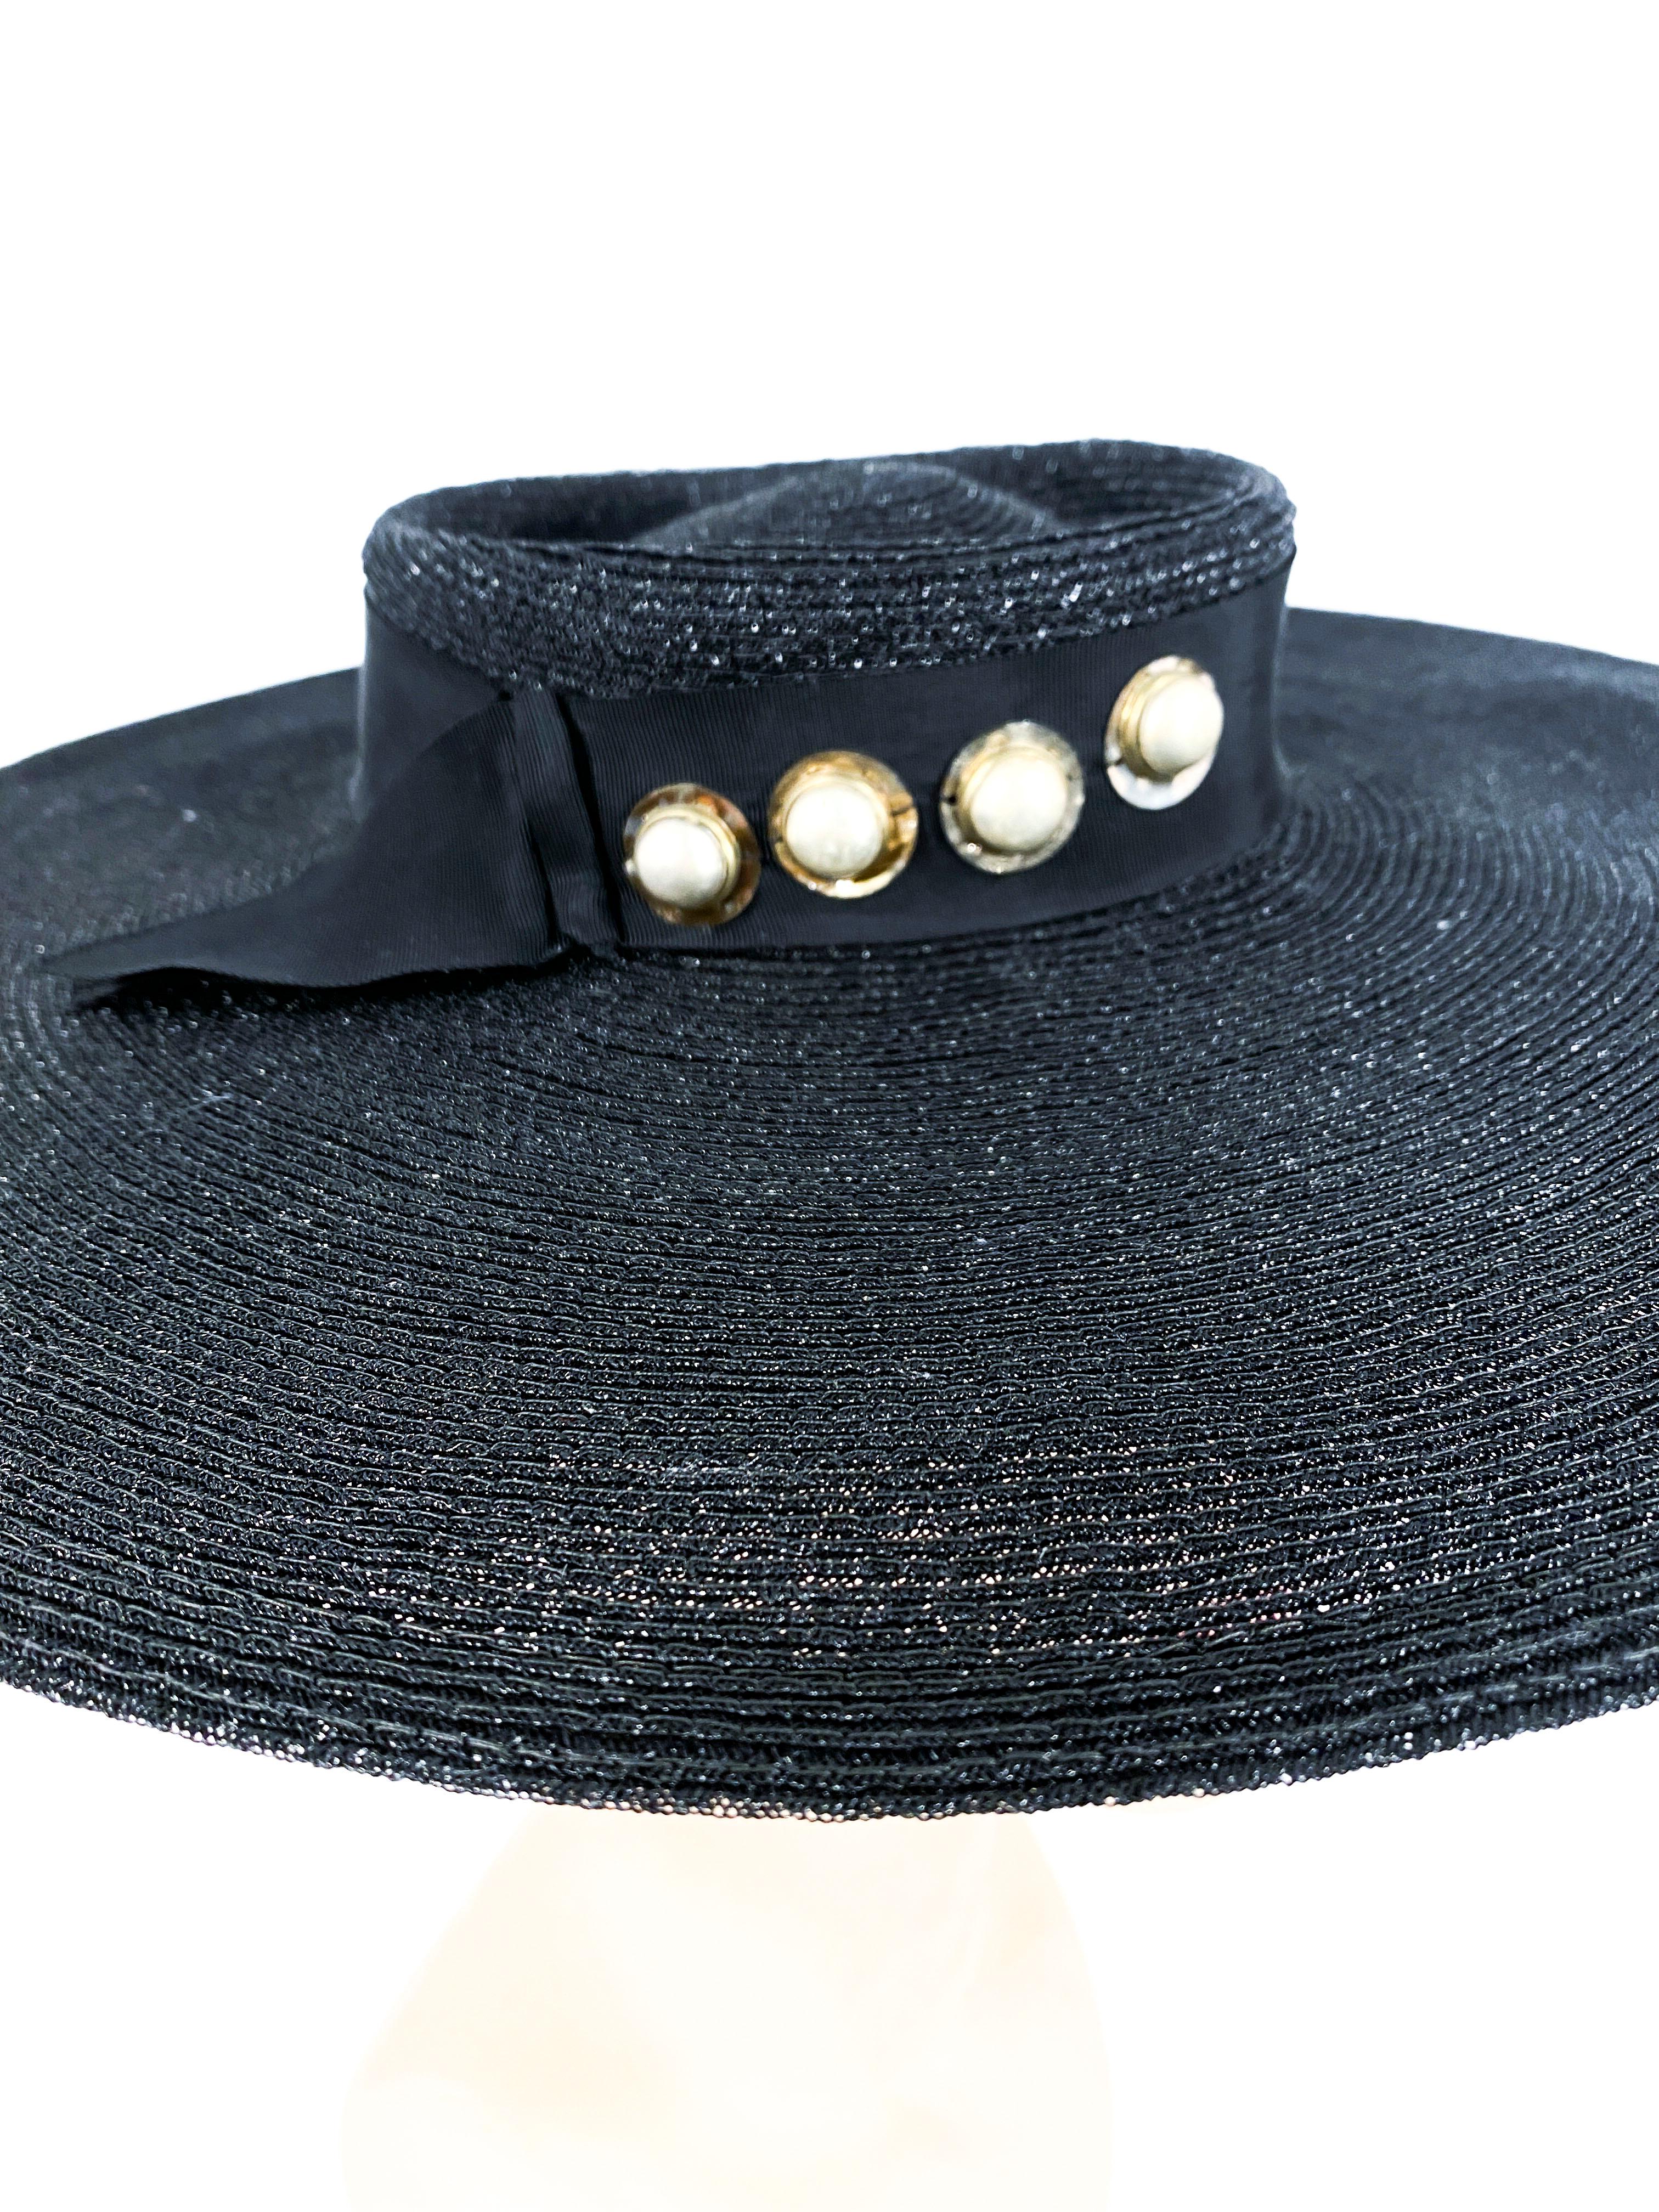 1930's hats